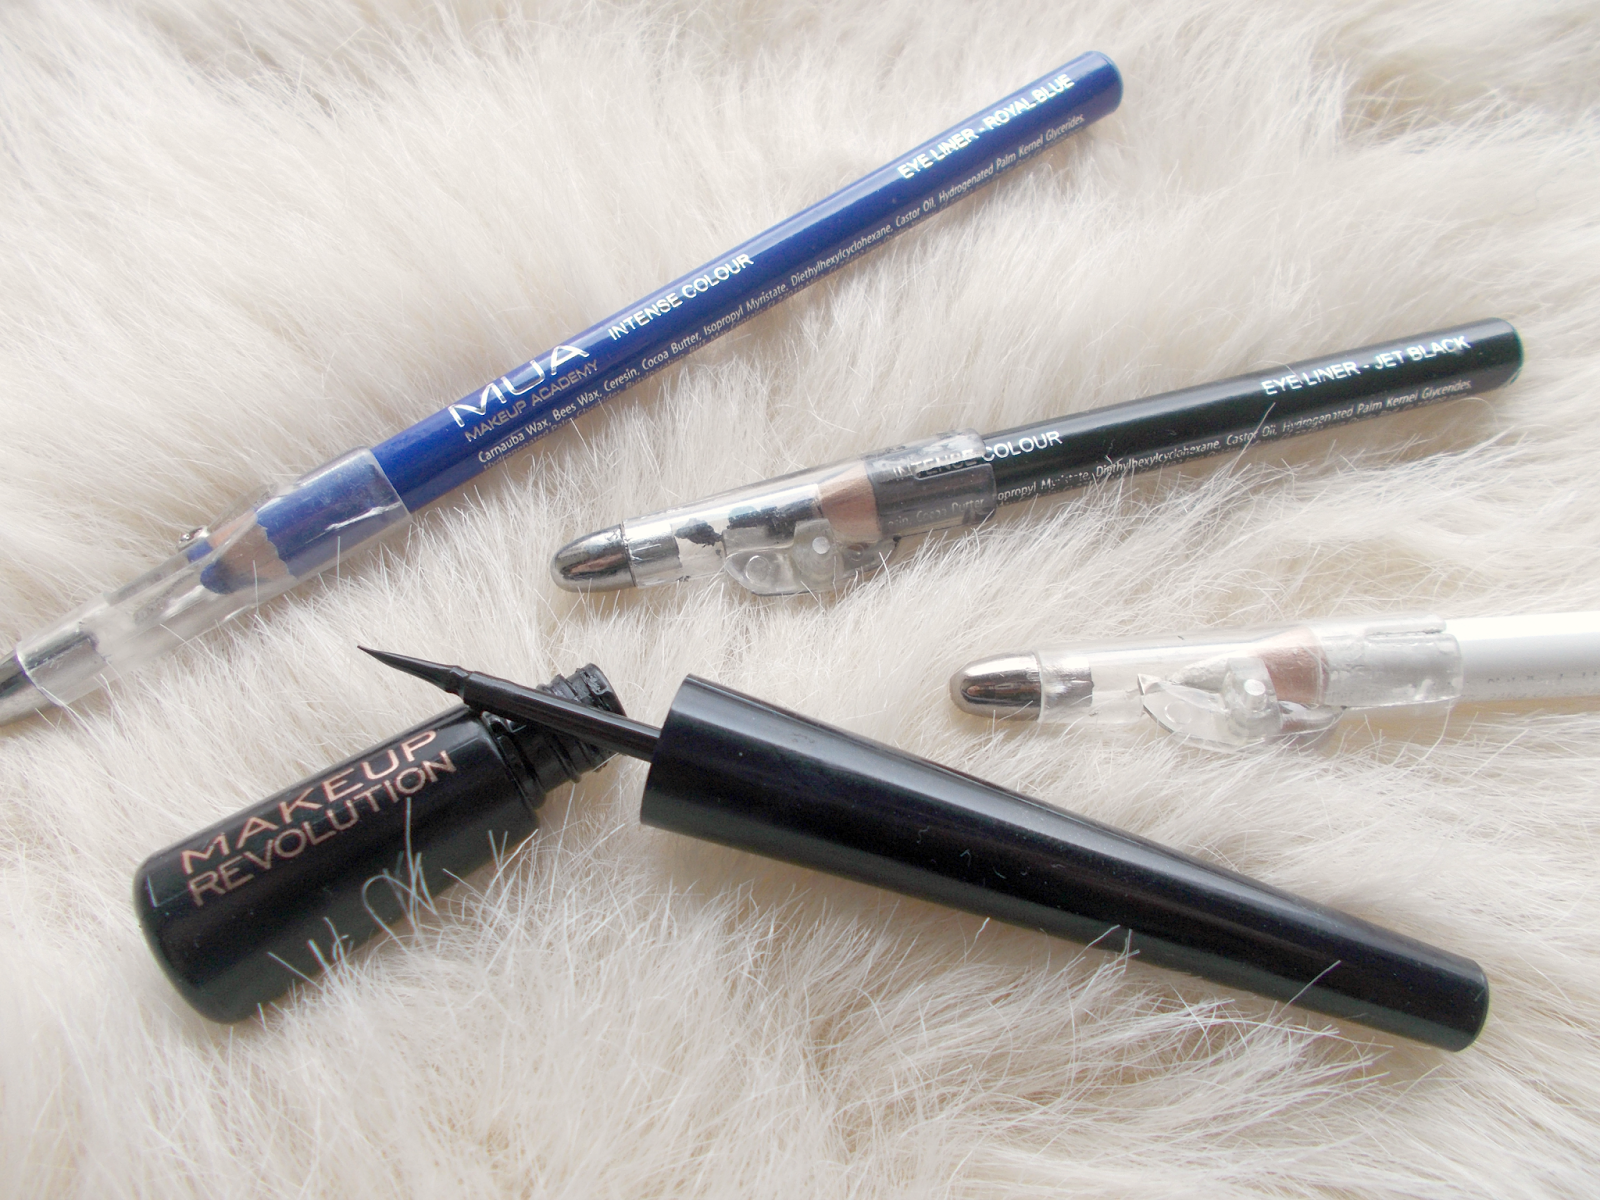 top 10 makeup products under £10 #irishblogcollab budget drugstore makeup revolution mua eyeliner pencil liquid